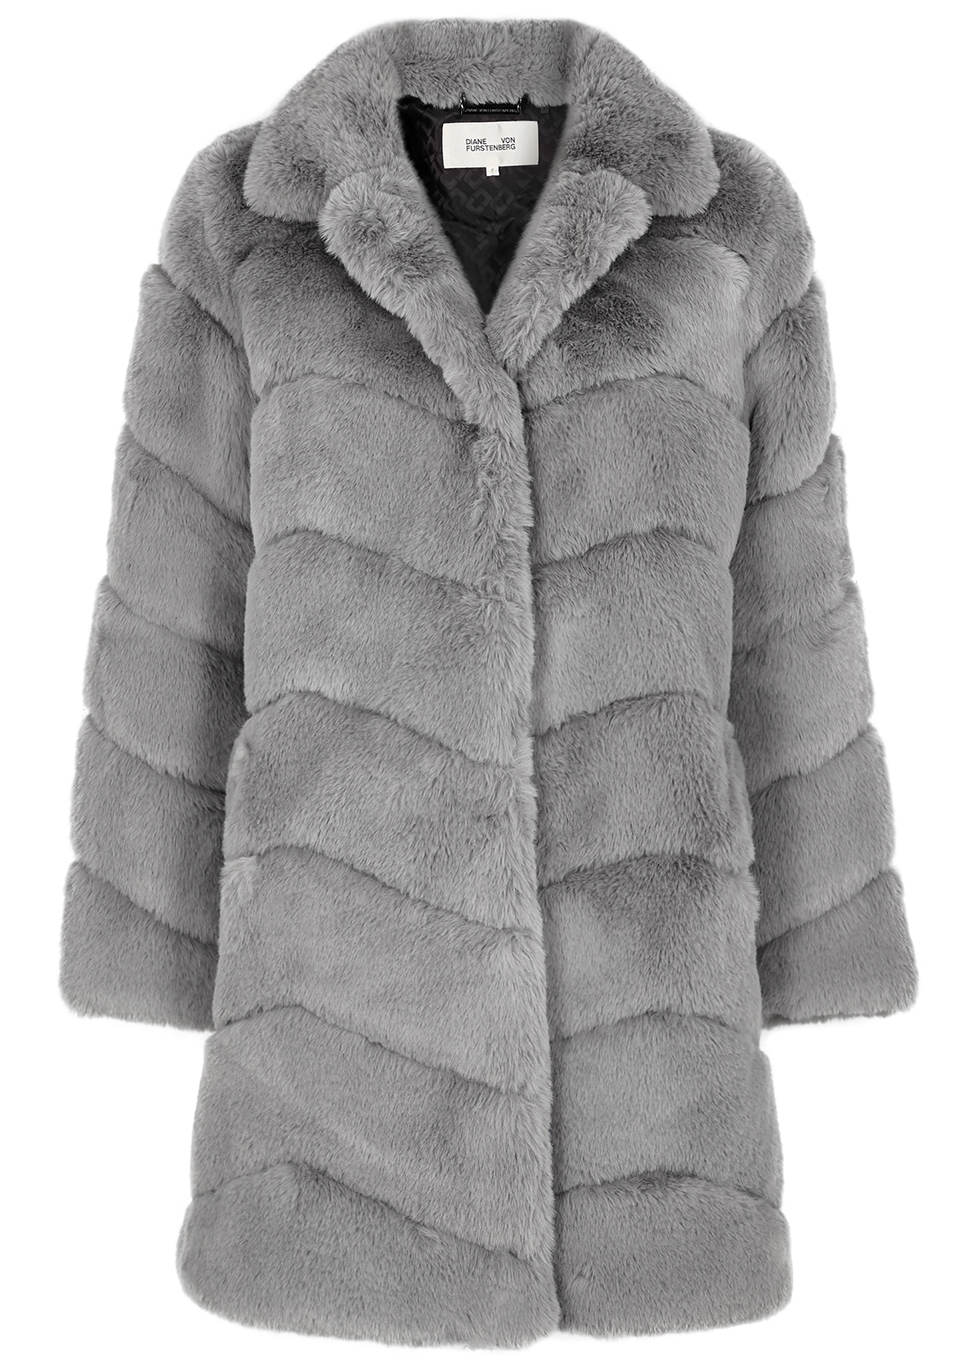 Tirzah grey faux fur coat